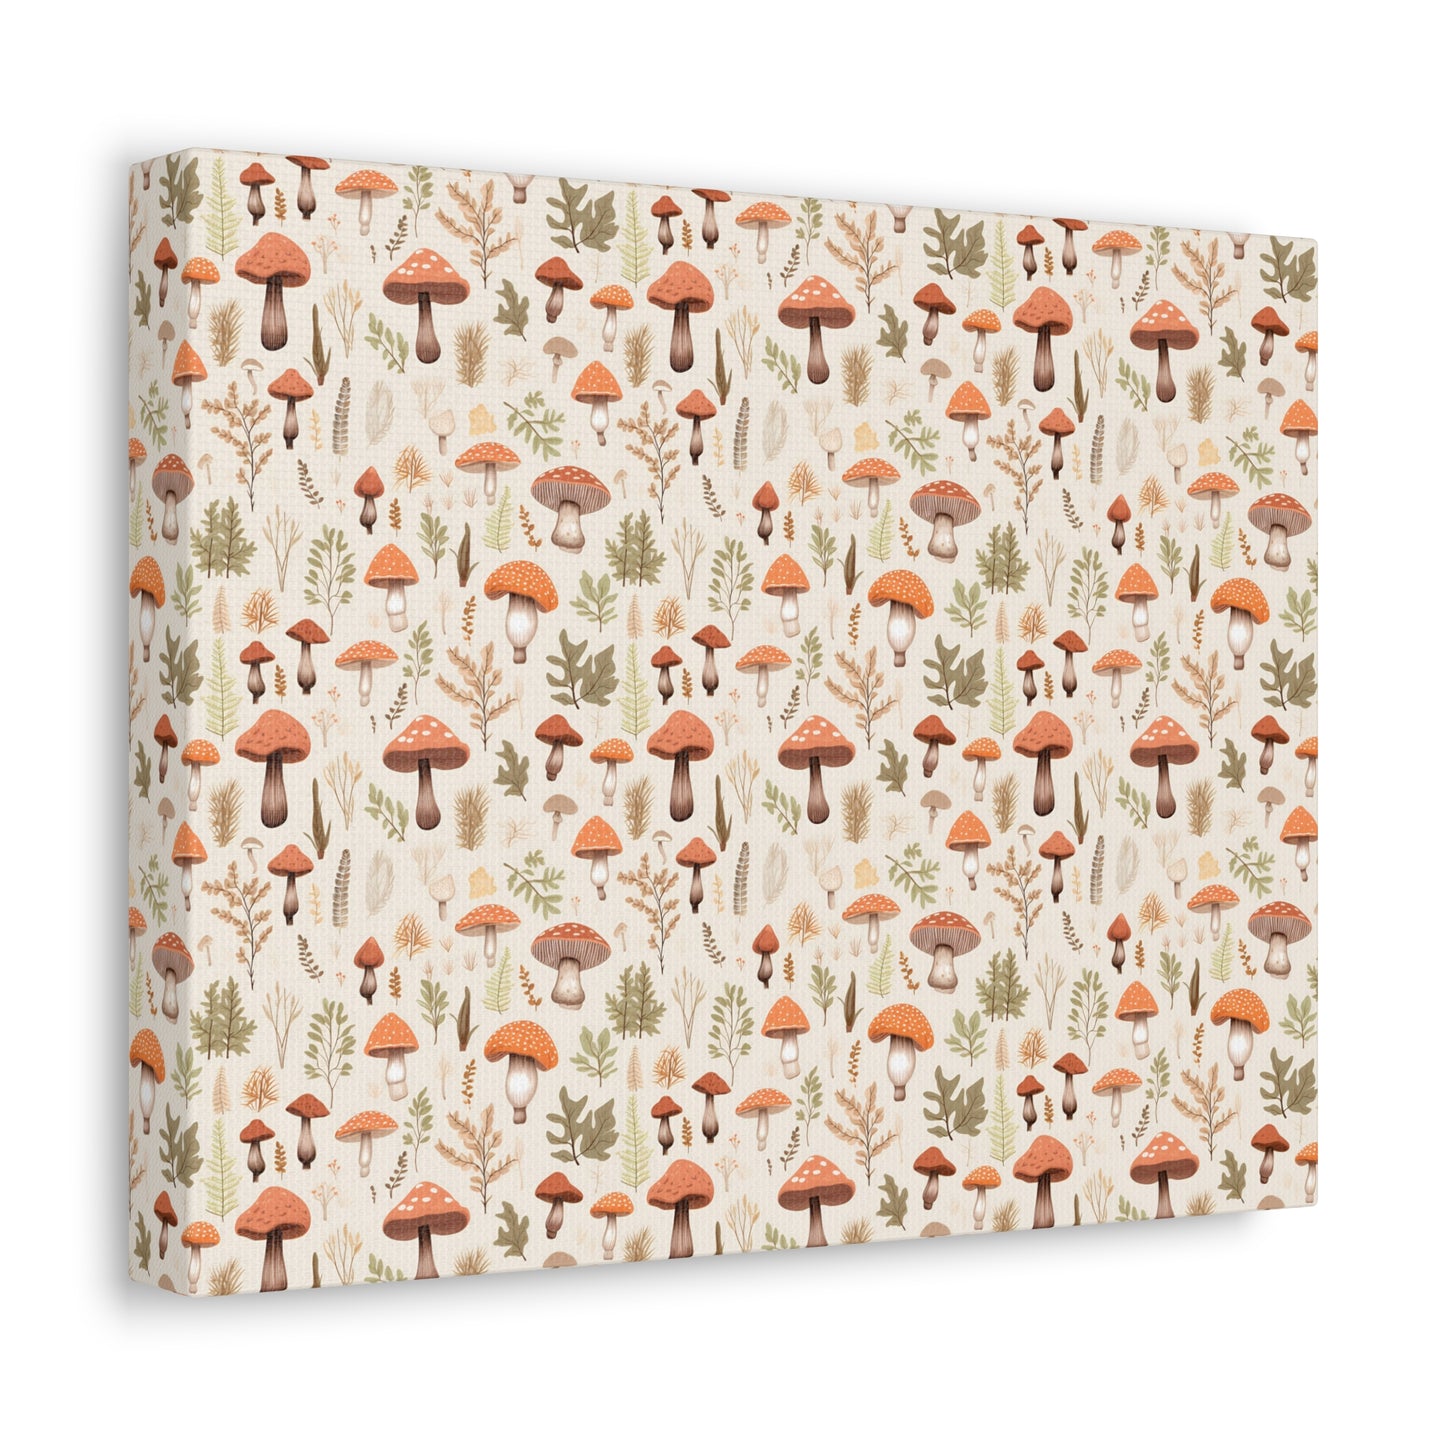 Mushroom Haven: Autumnal Tones Botanical Illustration - Satin Canvas, Stretched